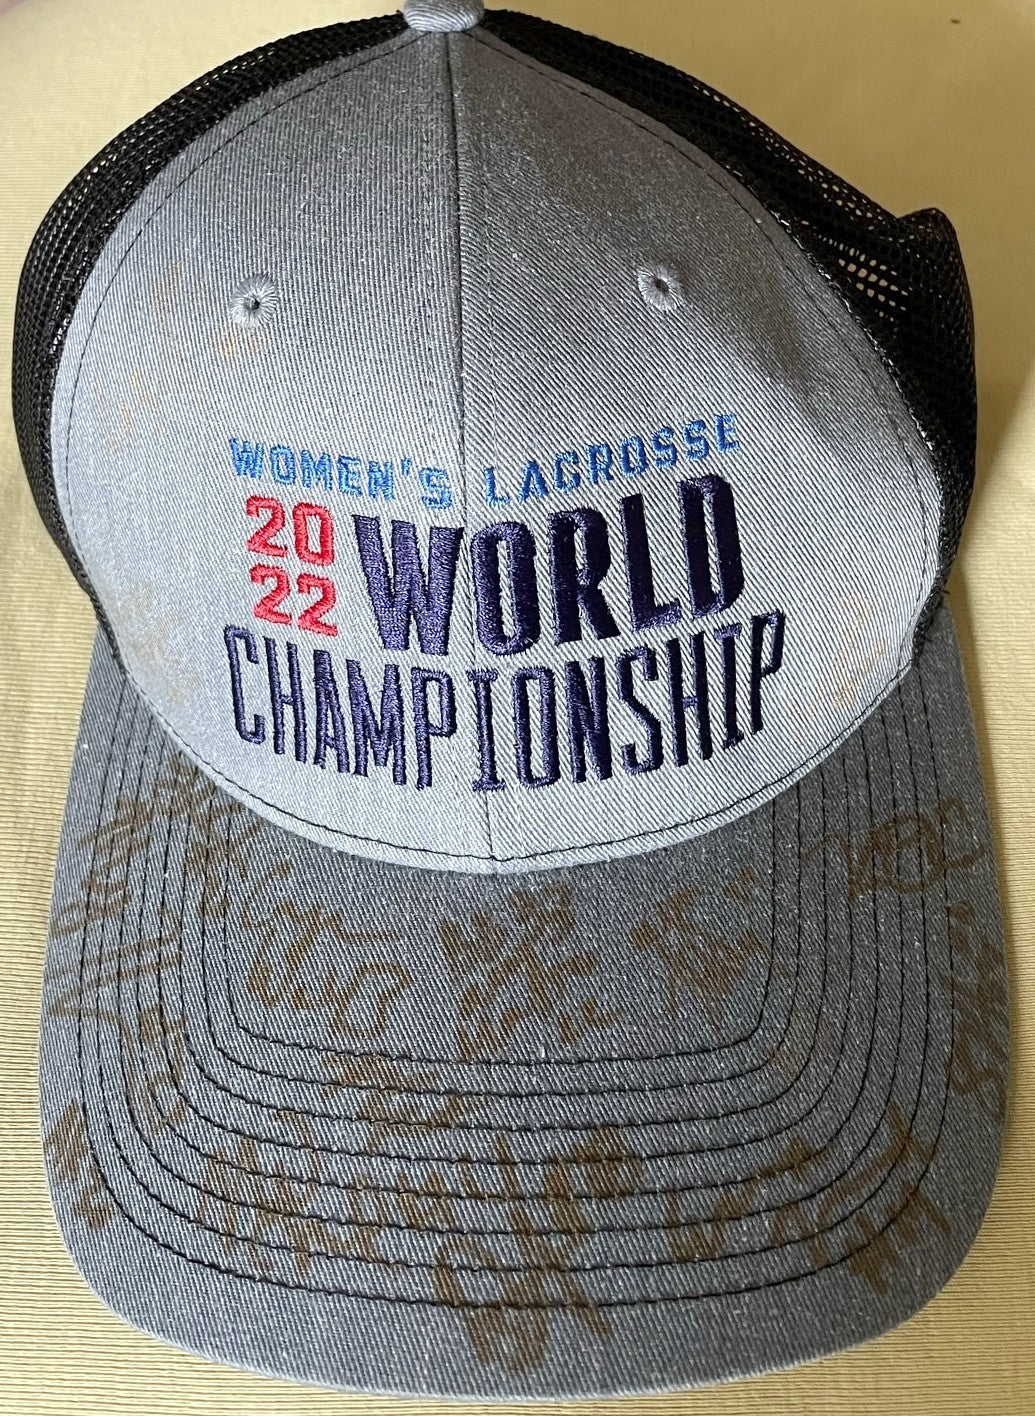 2022 Team USA Women's Lacrosse World Championship autographed cap or hat (Taylor Cummings)